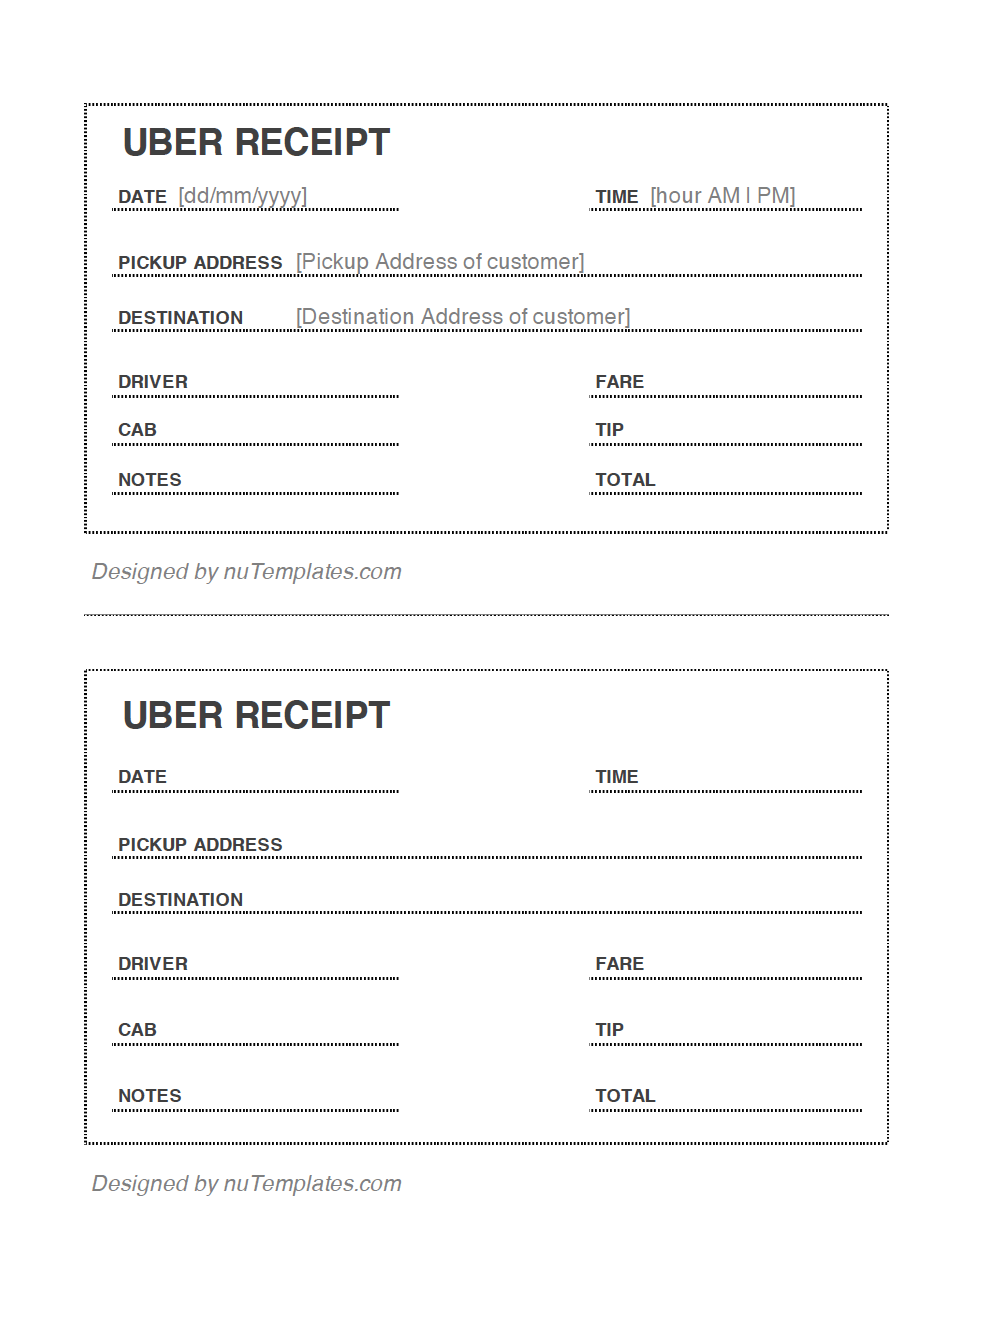 fake uber receipt template generator nutemplates